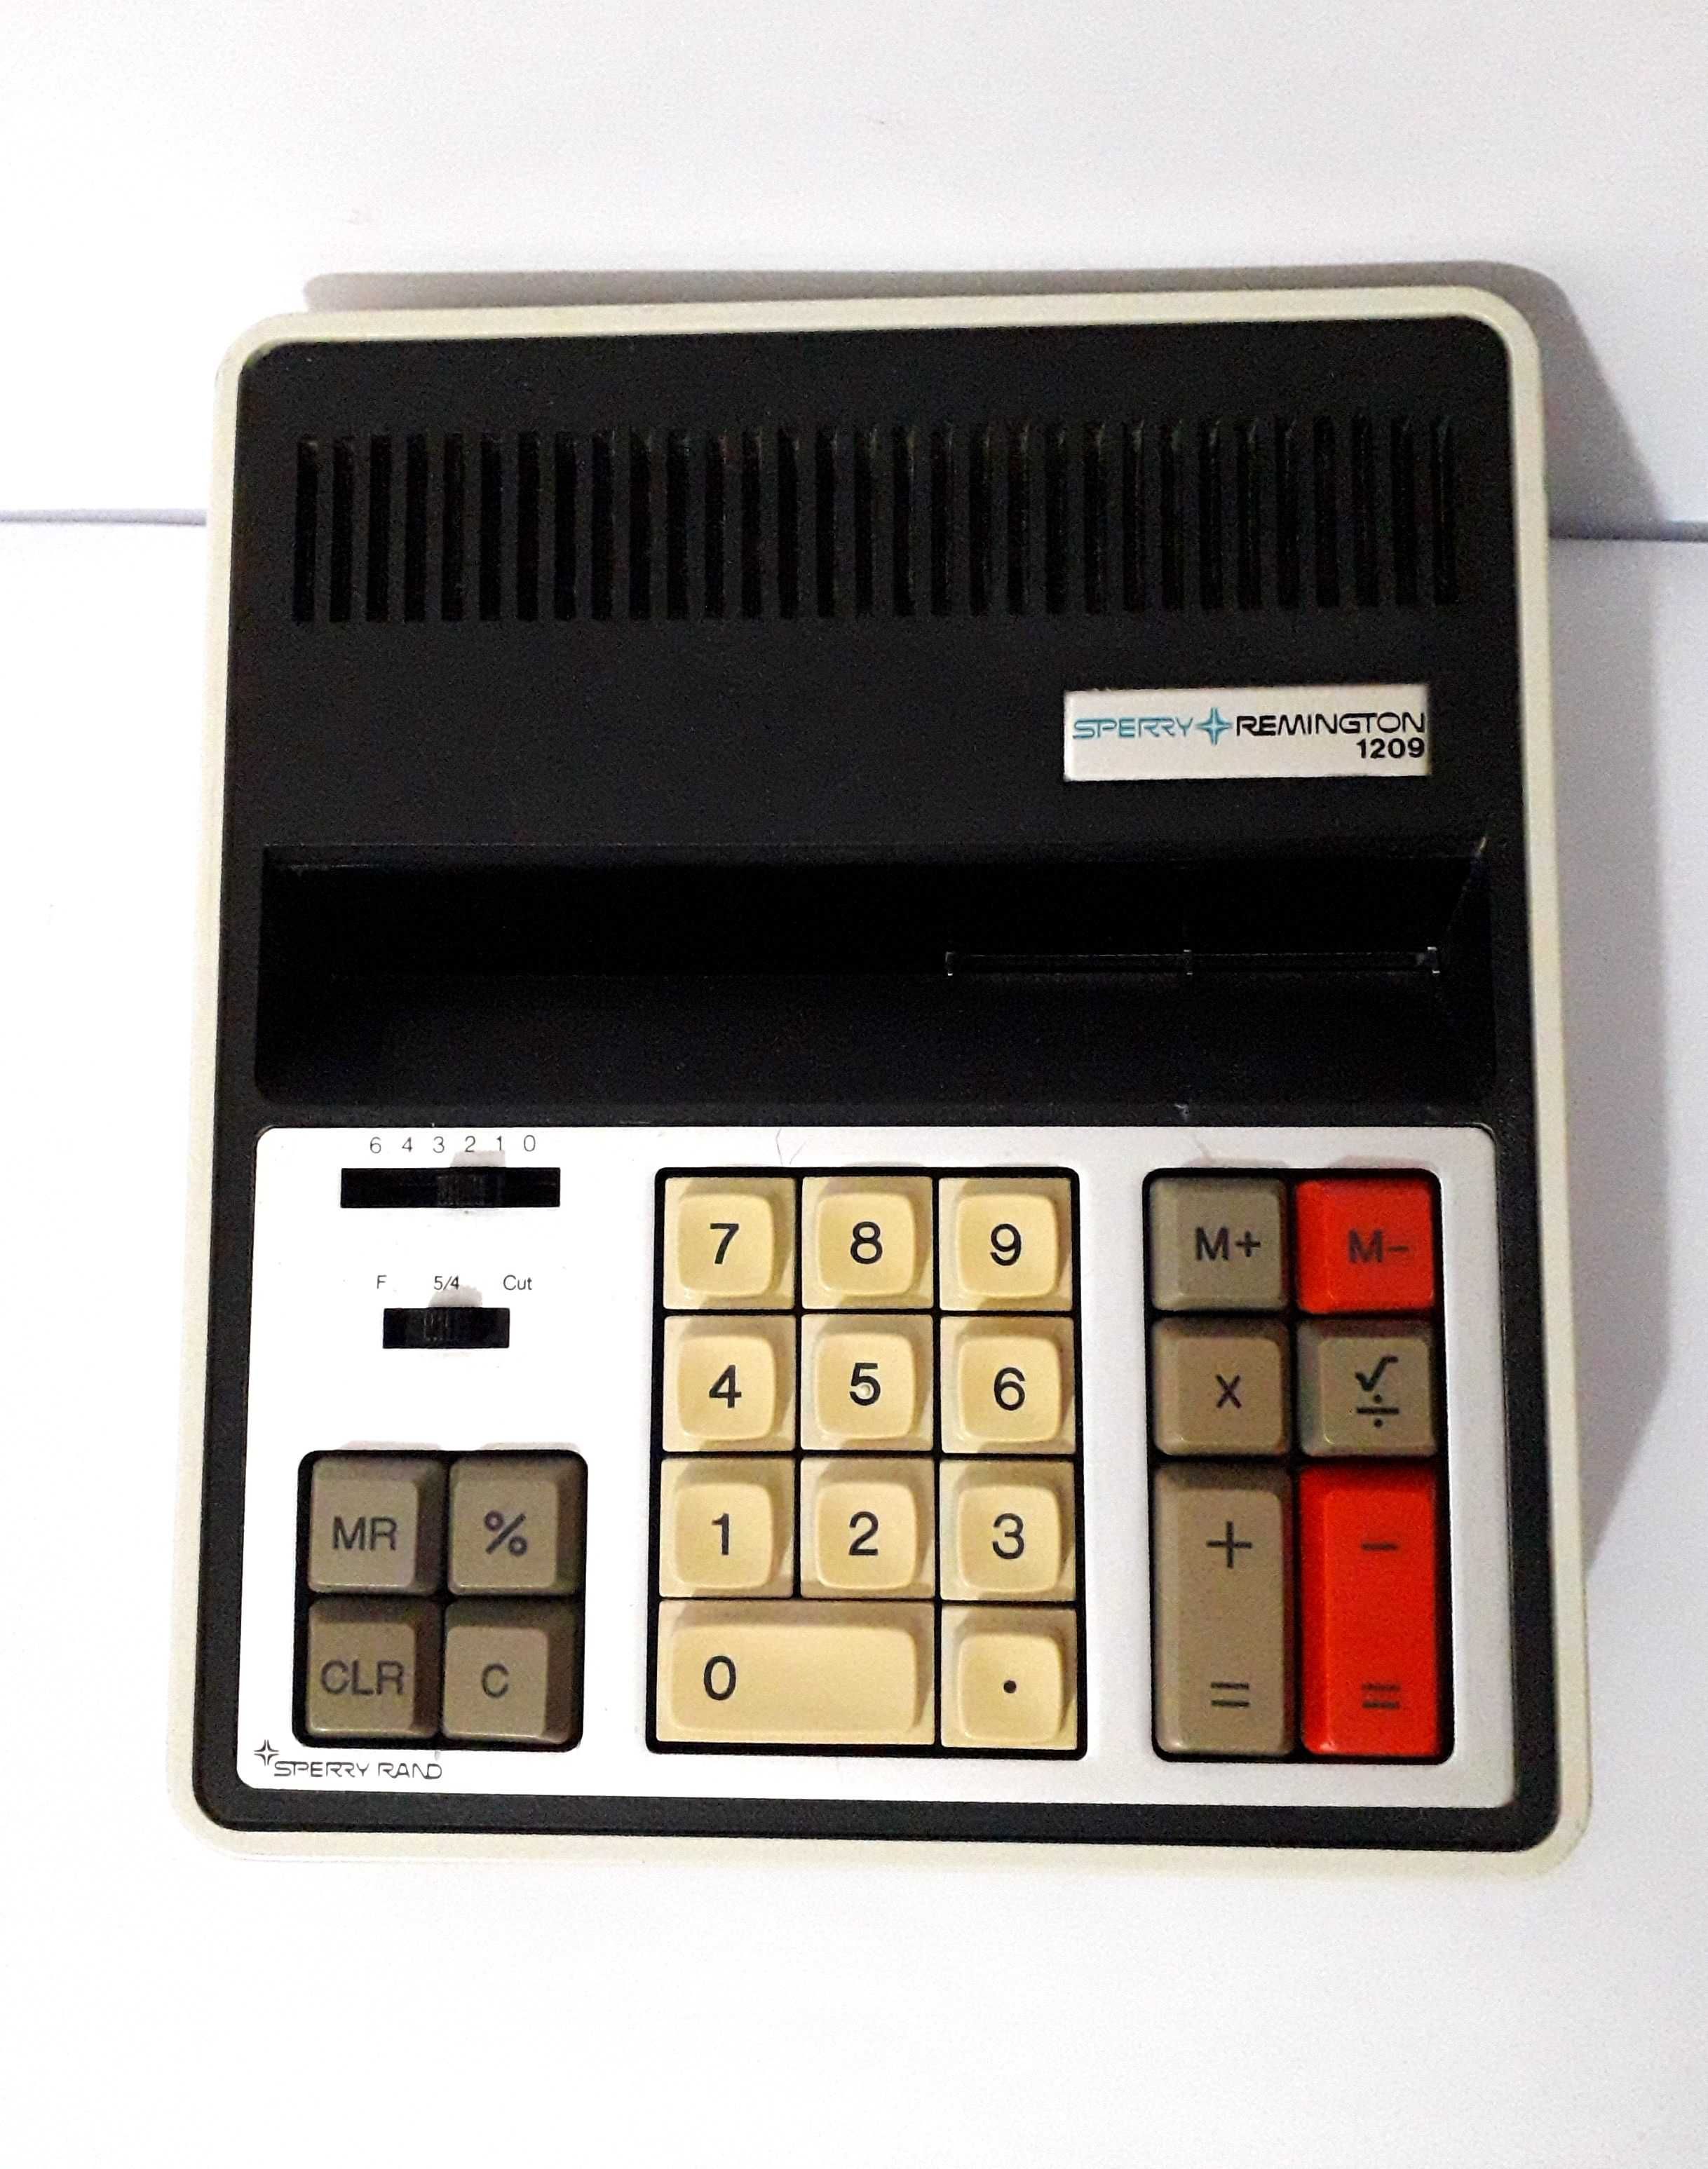 Máquina calculadora antiga Sperry Remington mod. 1209